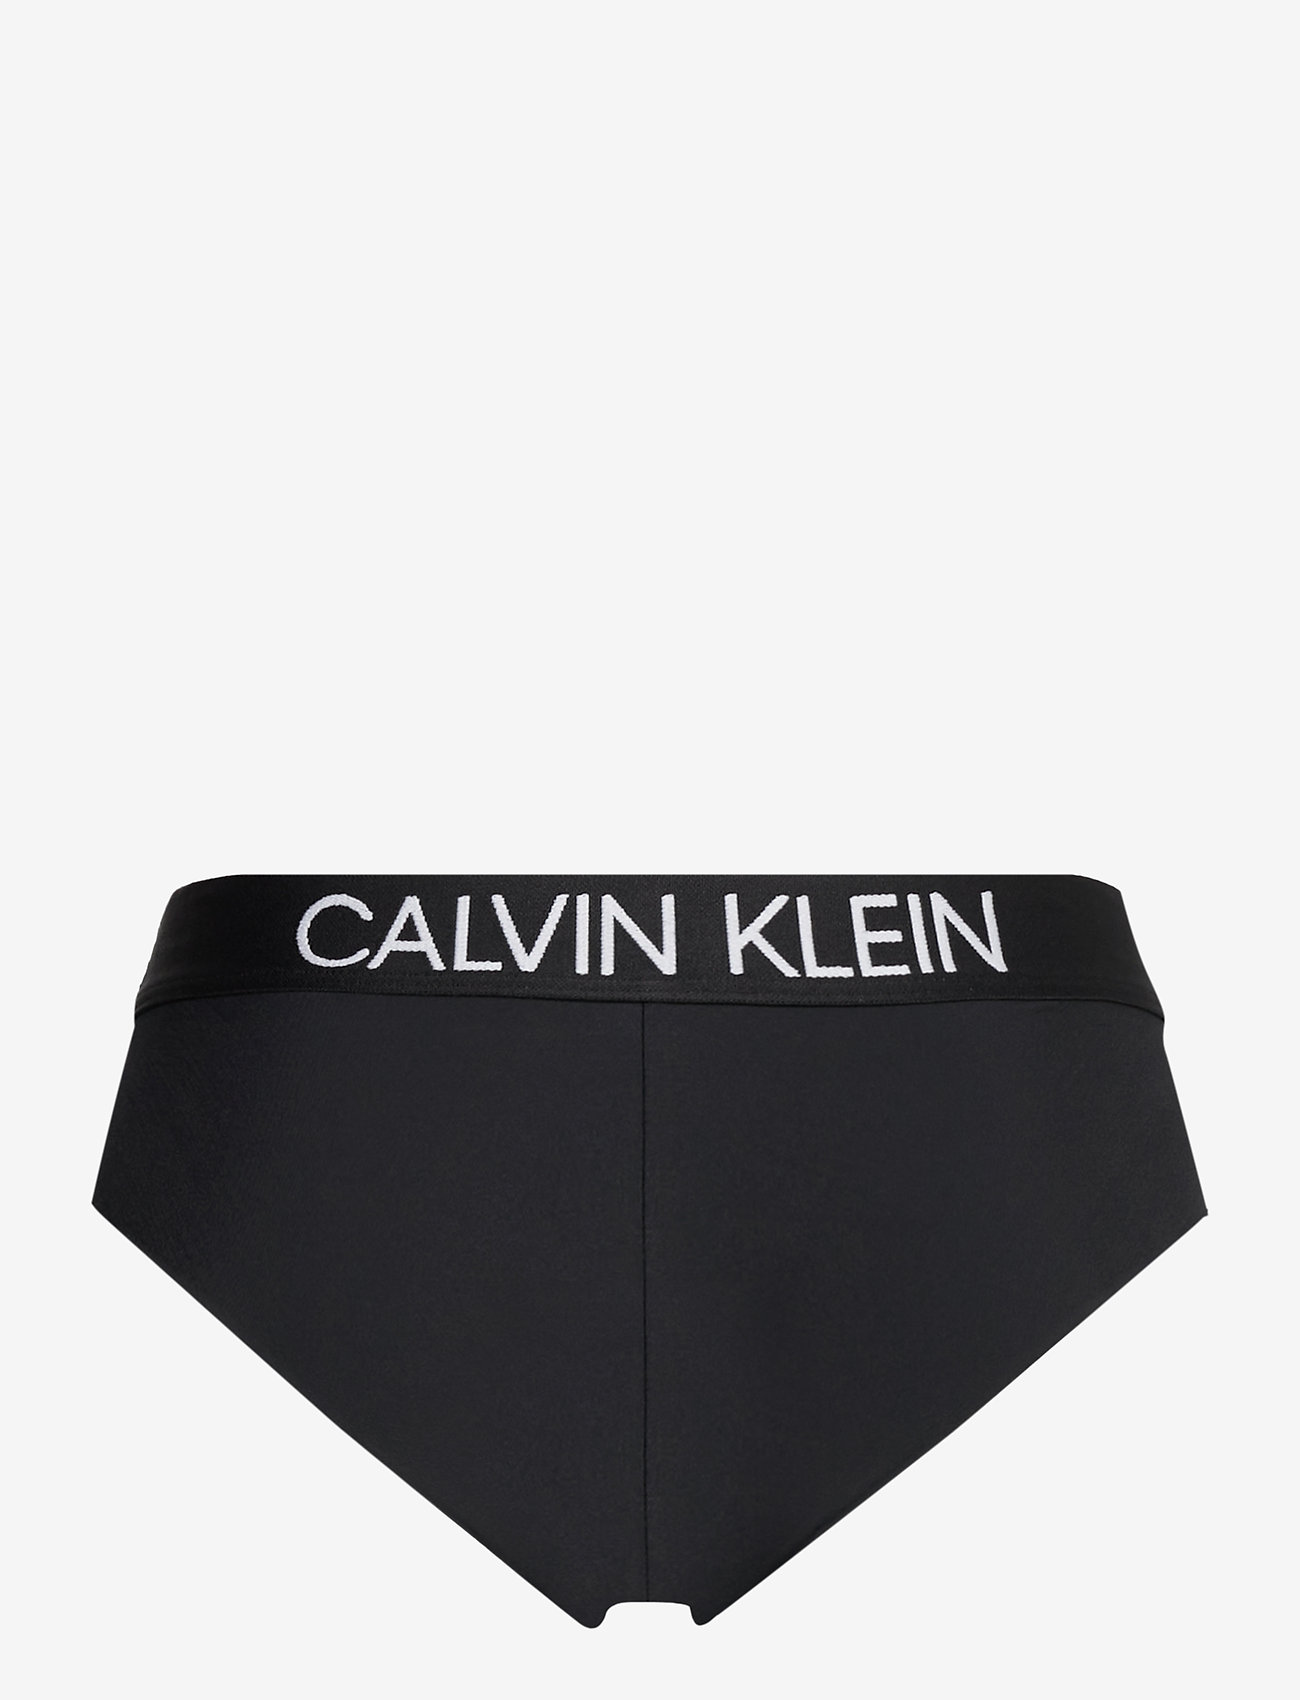 Calvin Klein - BRAZILIAN HIPSTER - trosor - pvh black - 1